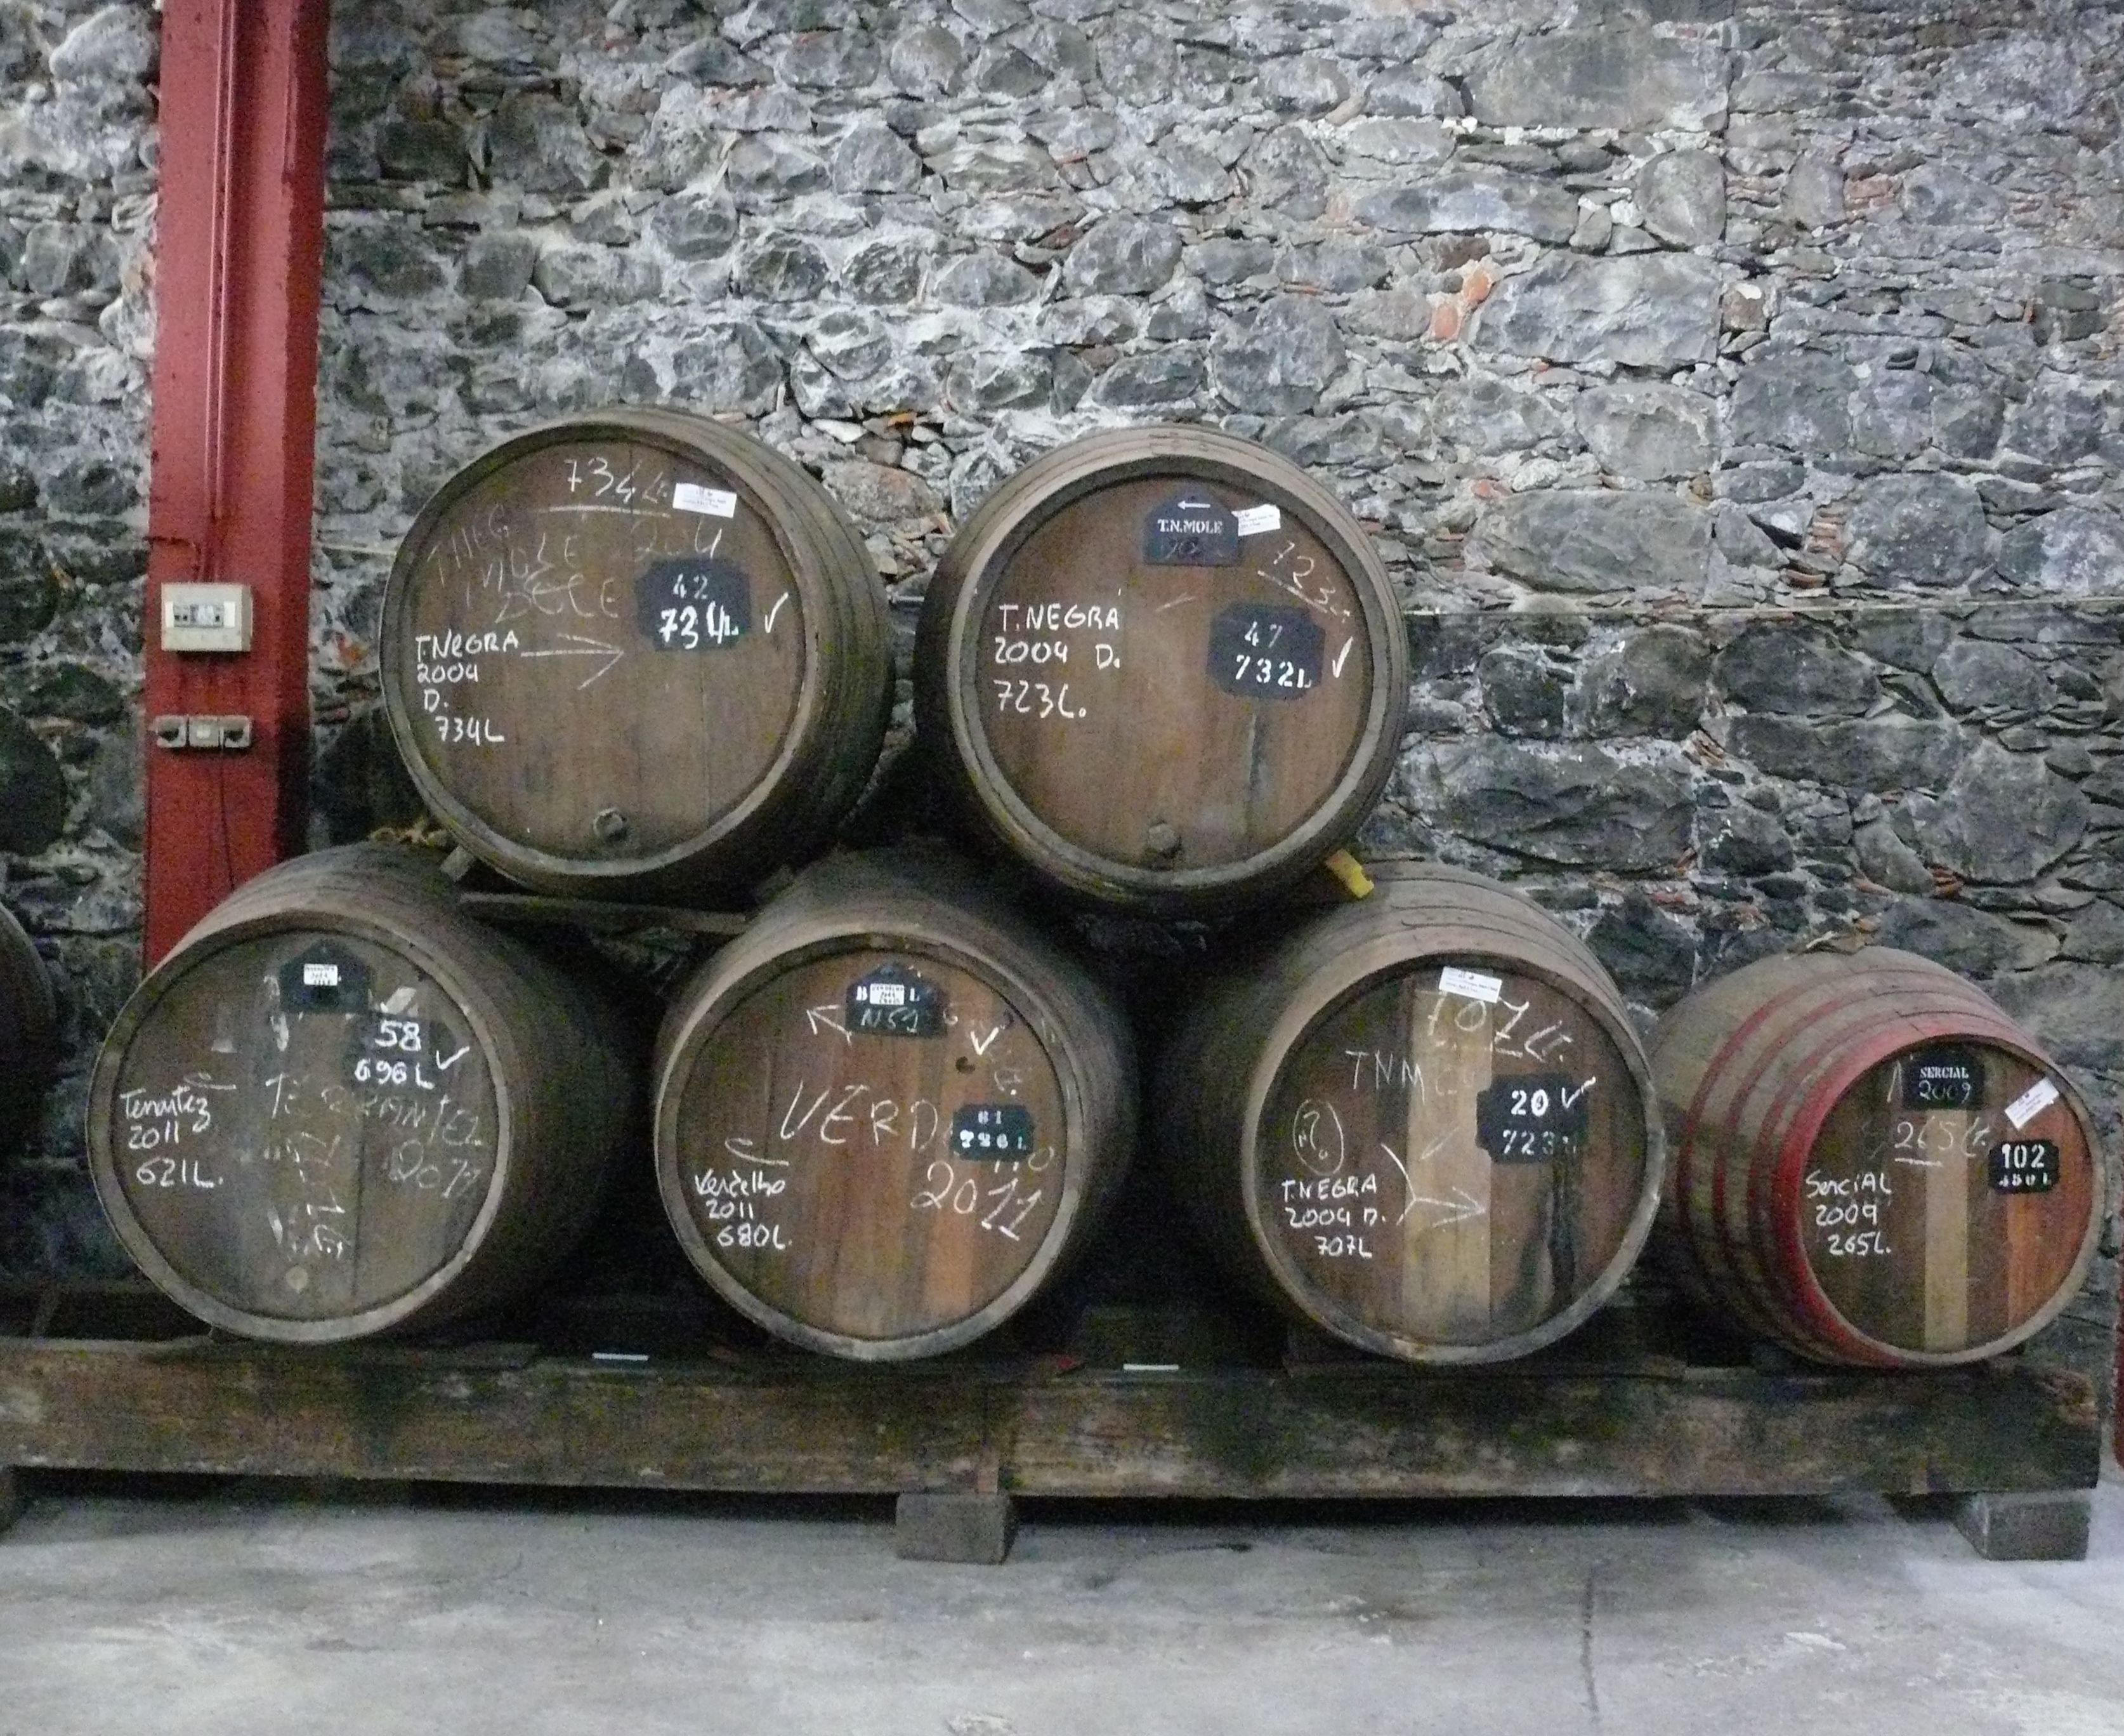 Barrels of Madeira wine 